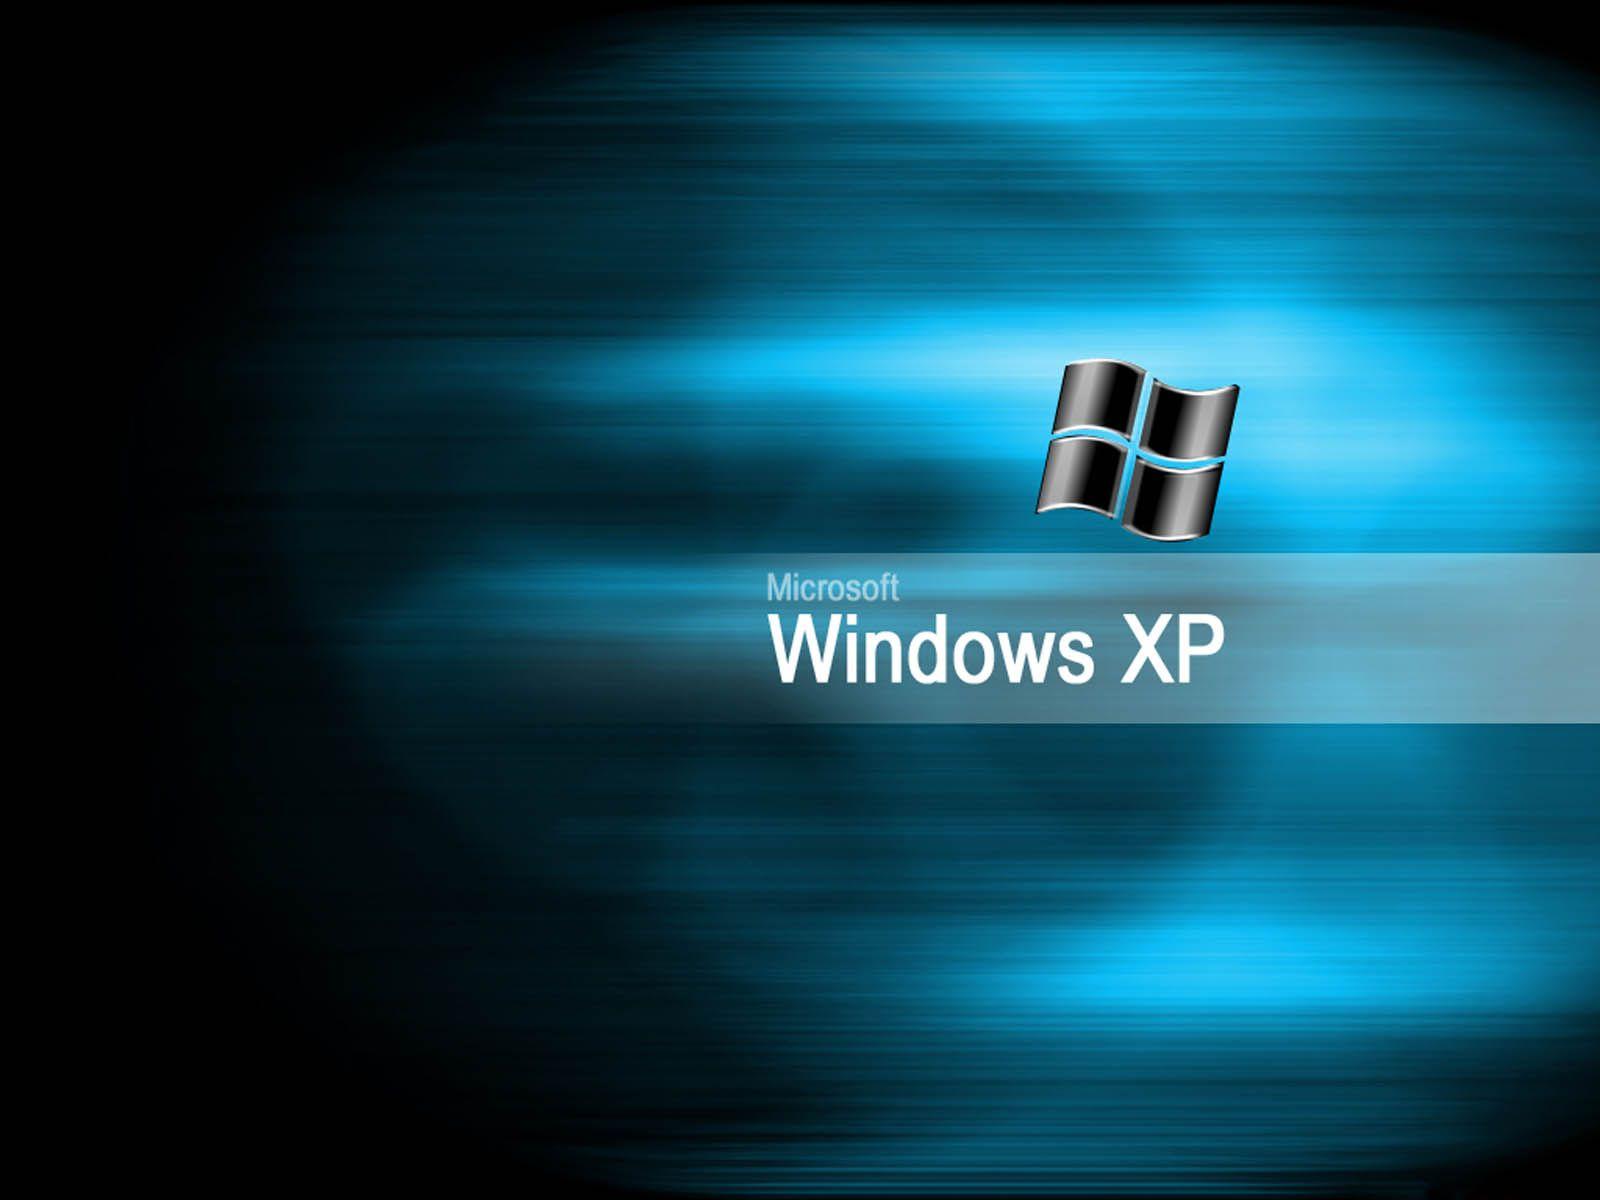 Windows Xp Wallpaper Ahd Image 1600x1200PX Wallpaper Windows